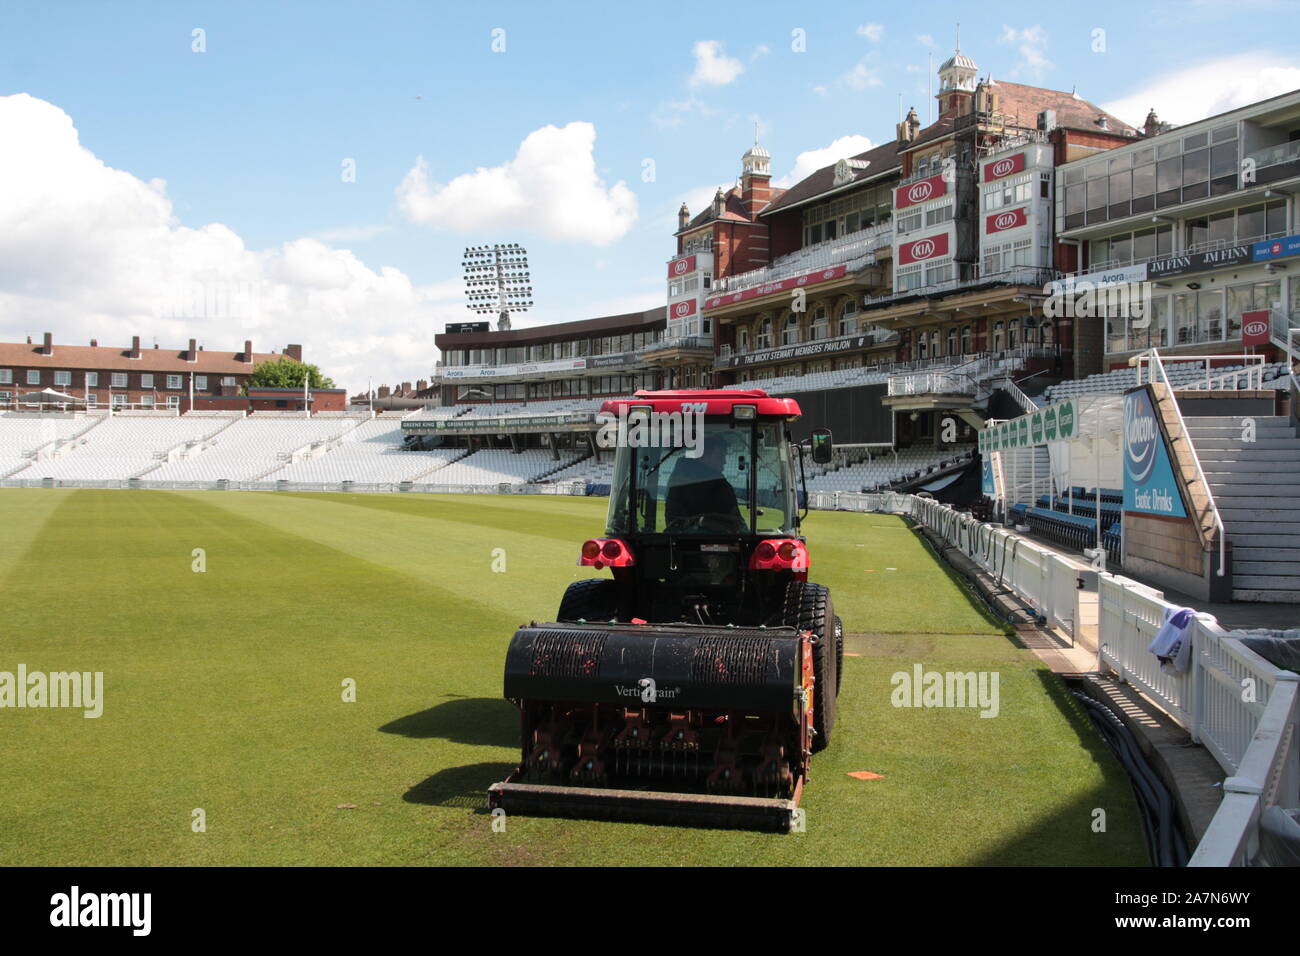 Kia Oval Cricket Stadium, London, England, UK Banque D'Images